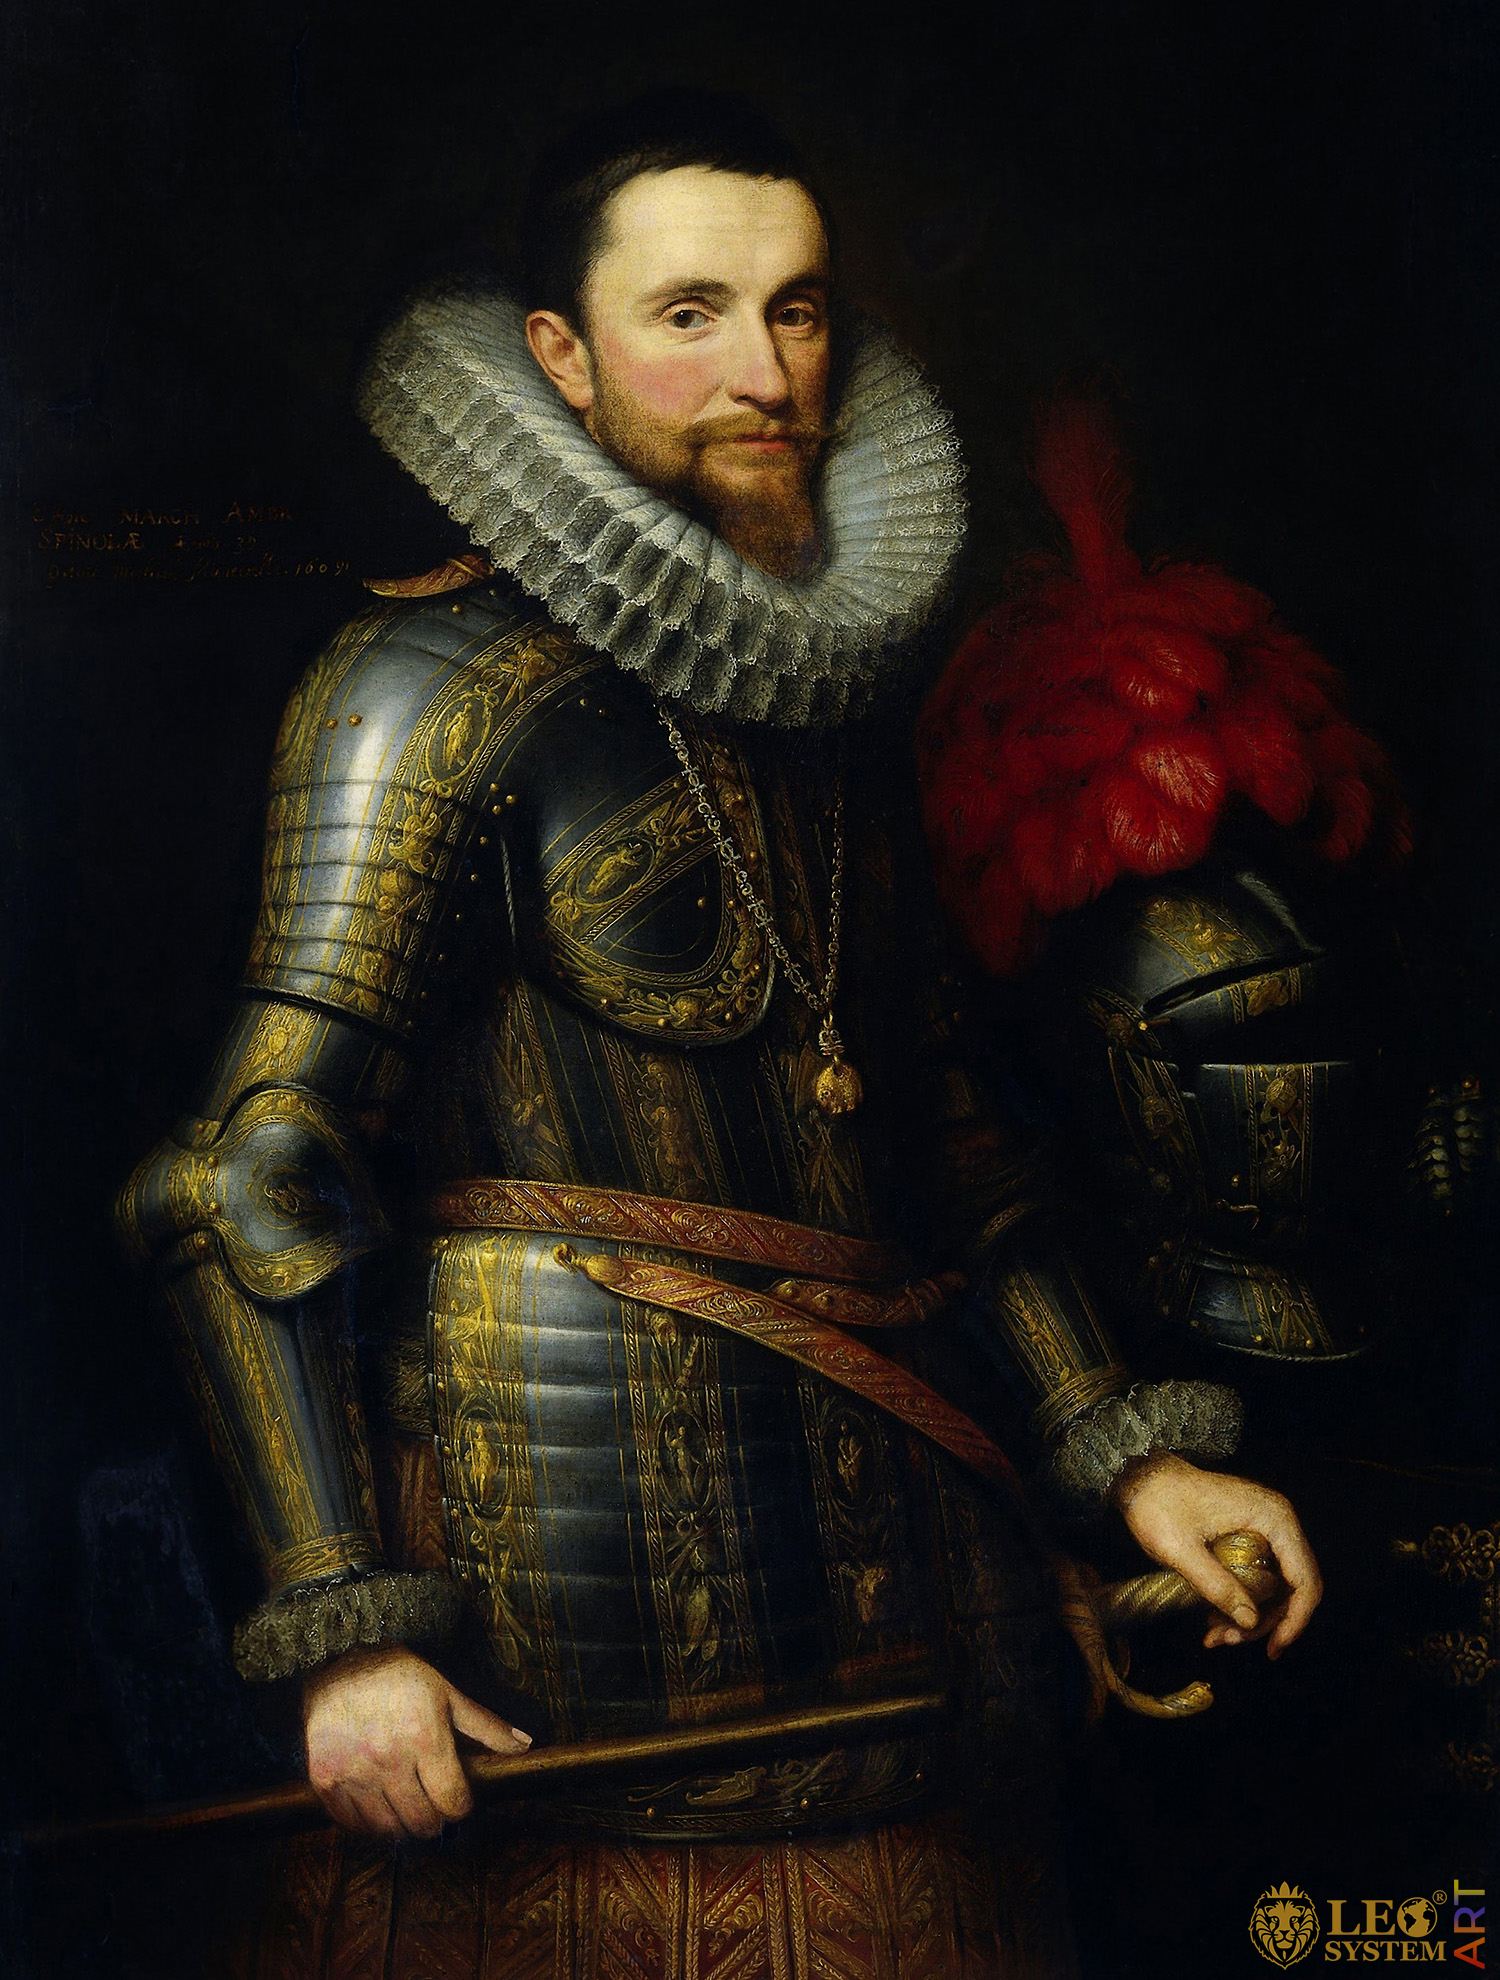 Portrait of Ambrogio Spinola, Painter: Michiel Jansz van Mierevelt, 1609, Northern Netherlands